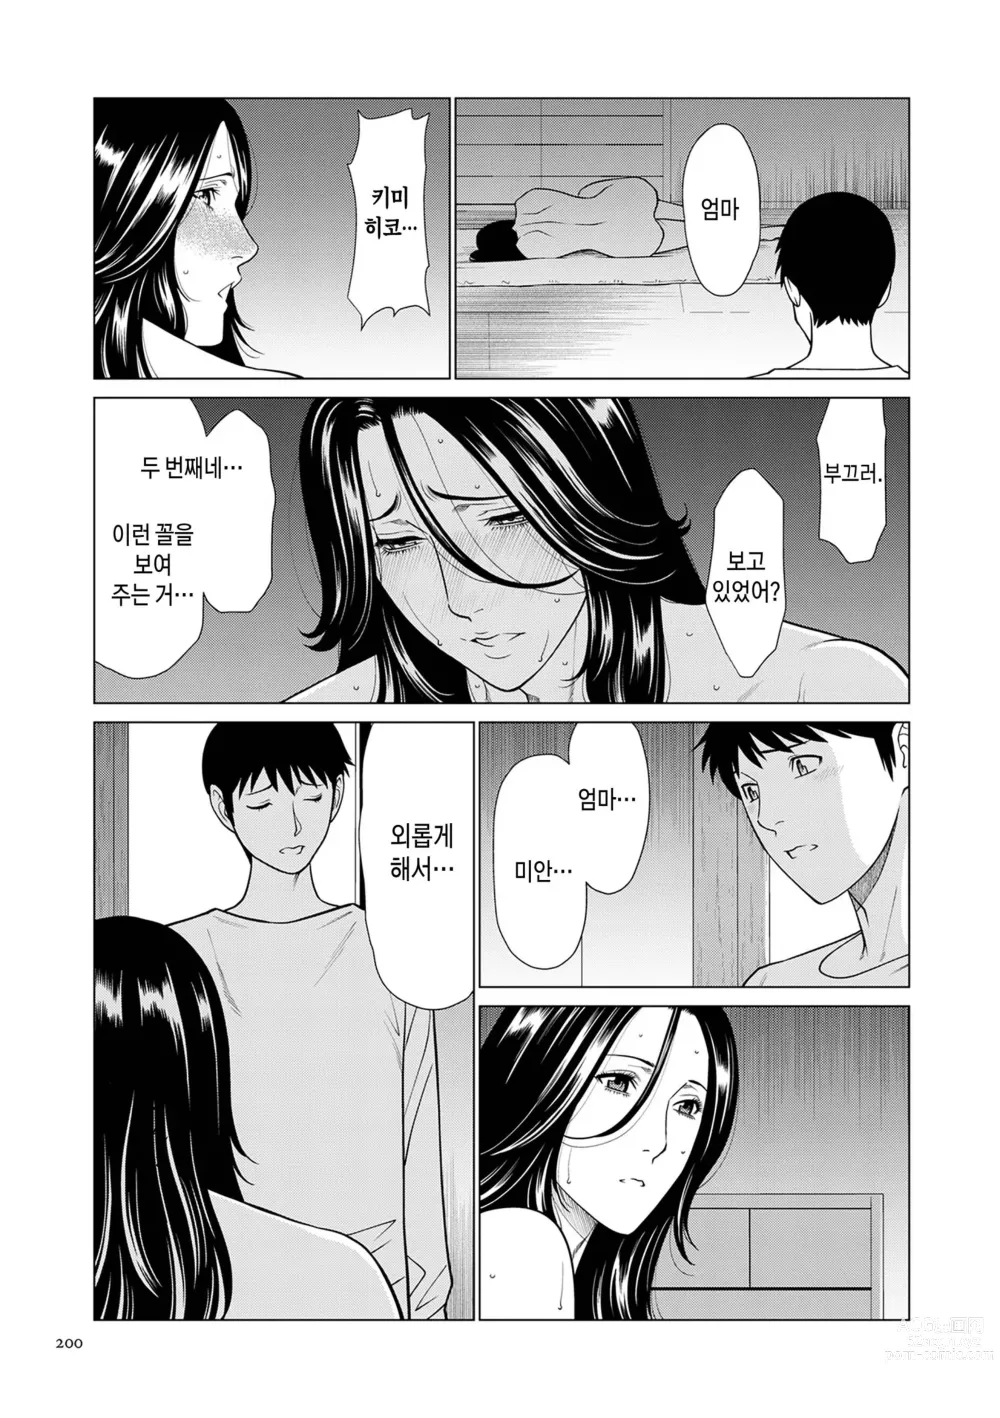 Page 199 of manga My Fair MILF